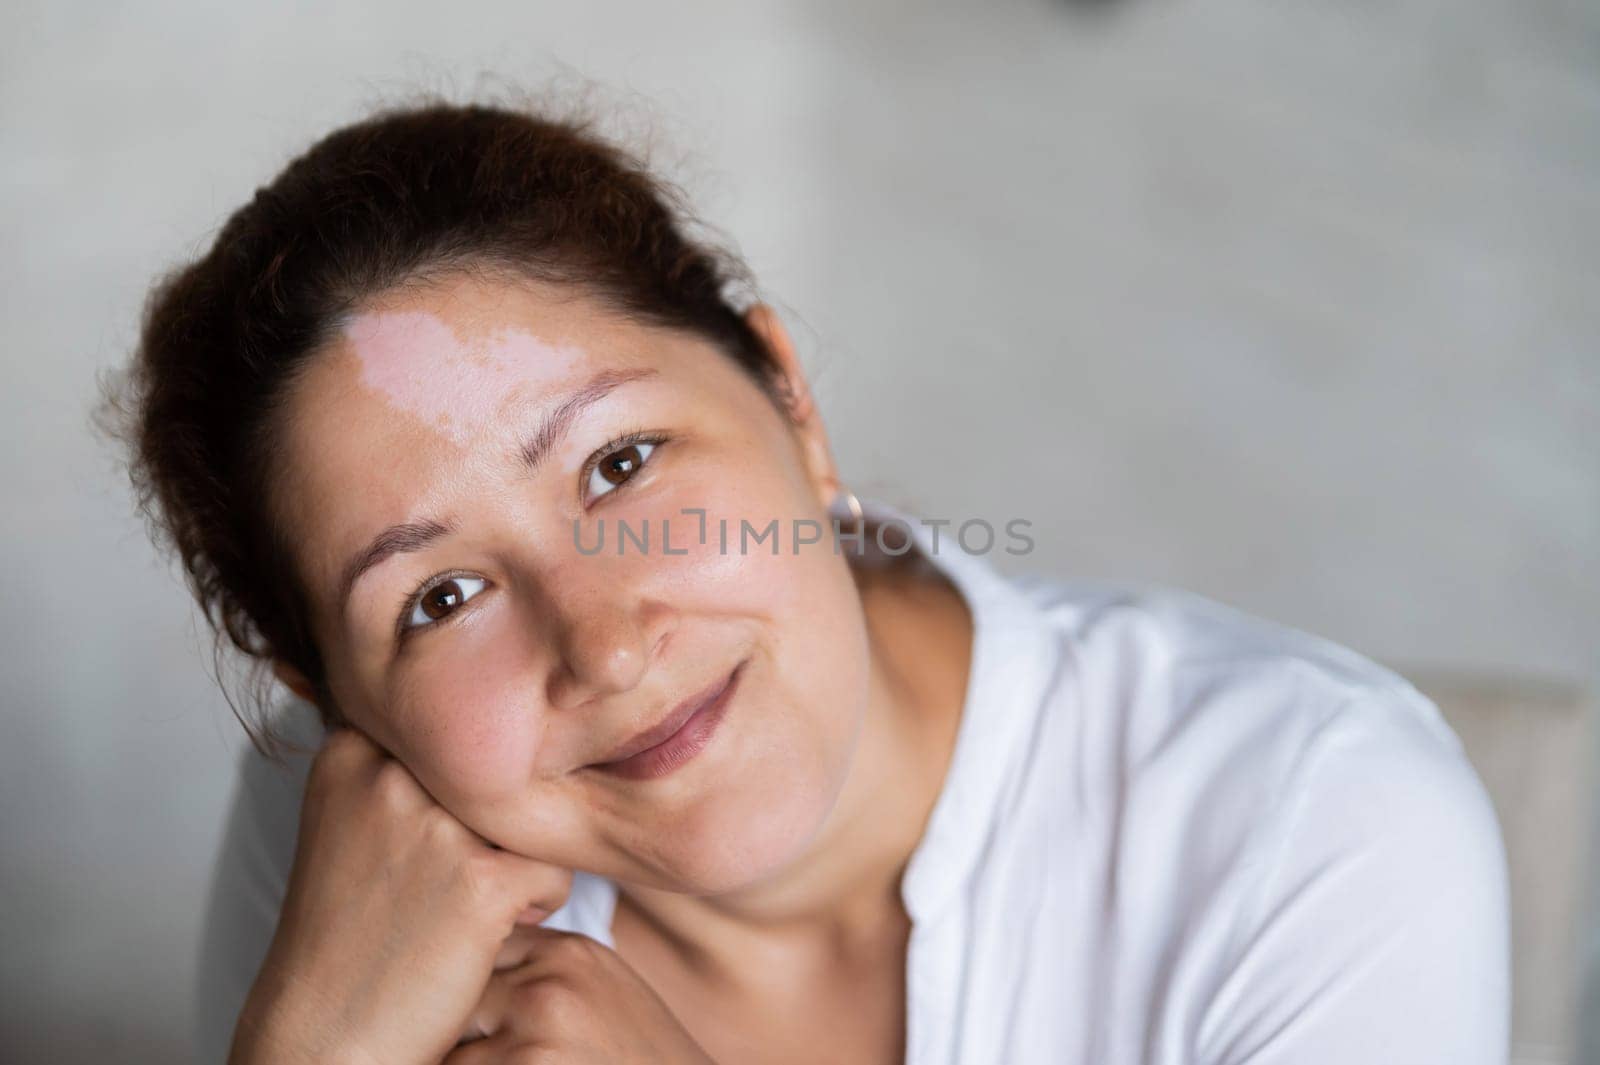 Portrait of a smiling woman with Vitiligo Disease